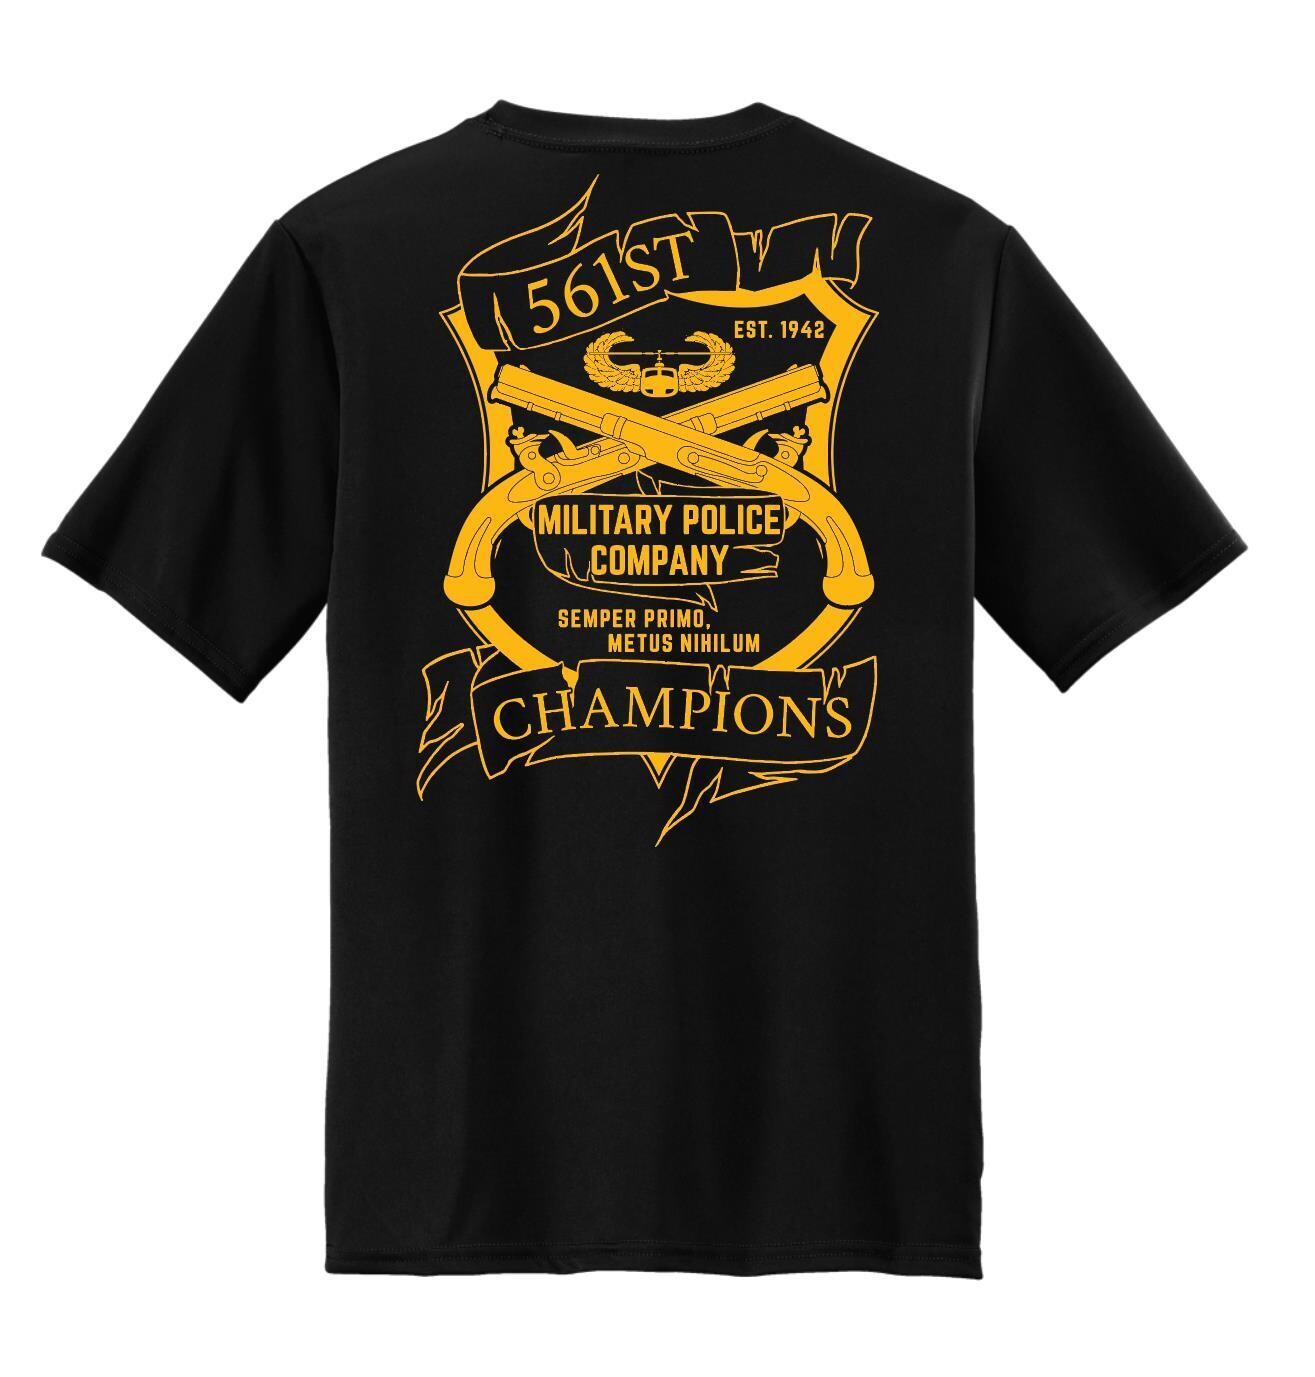 561st MP Co. Champions Shirt